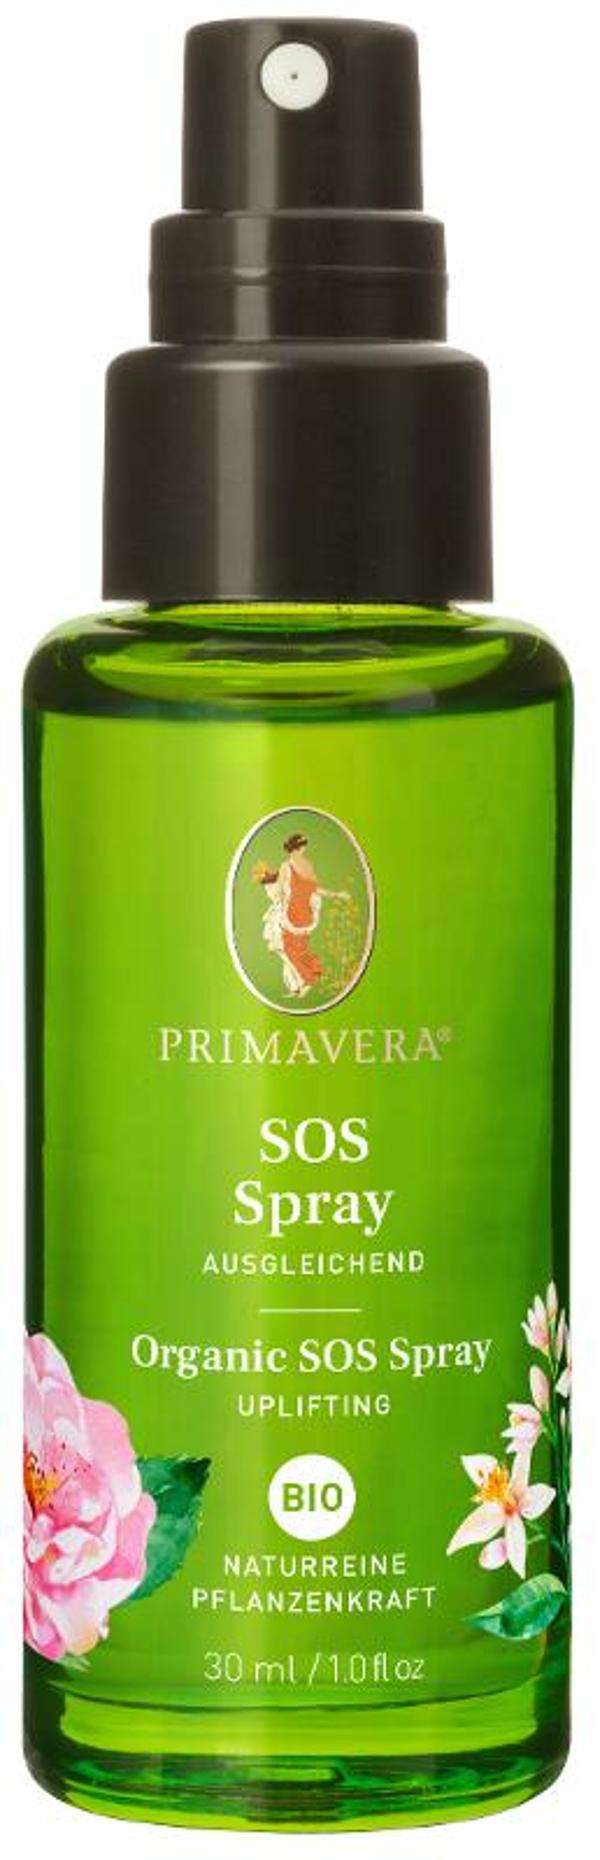 Produktfoto zu SOS Spray